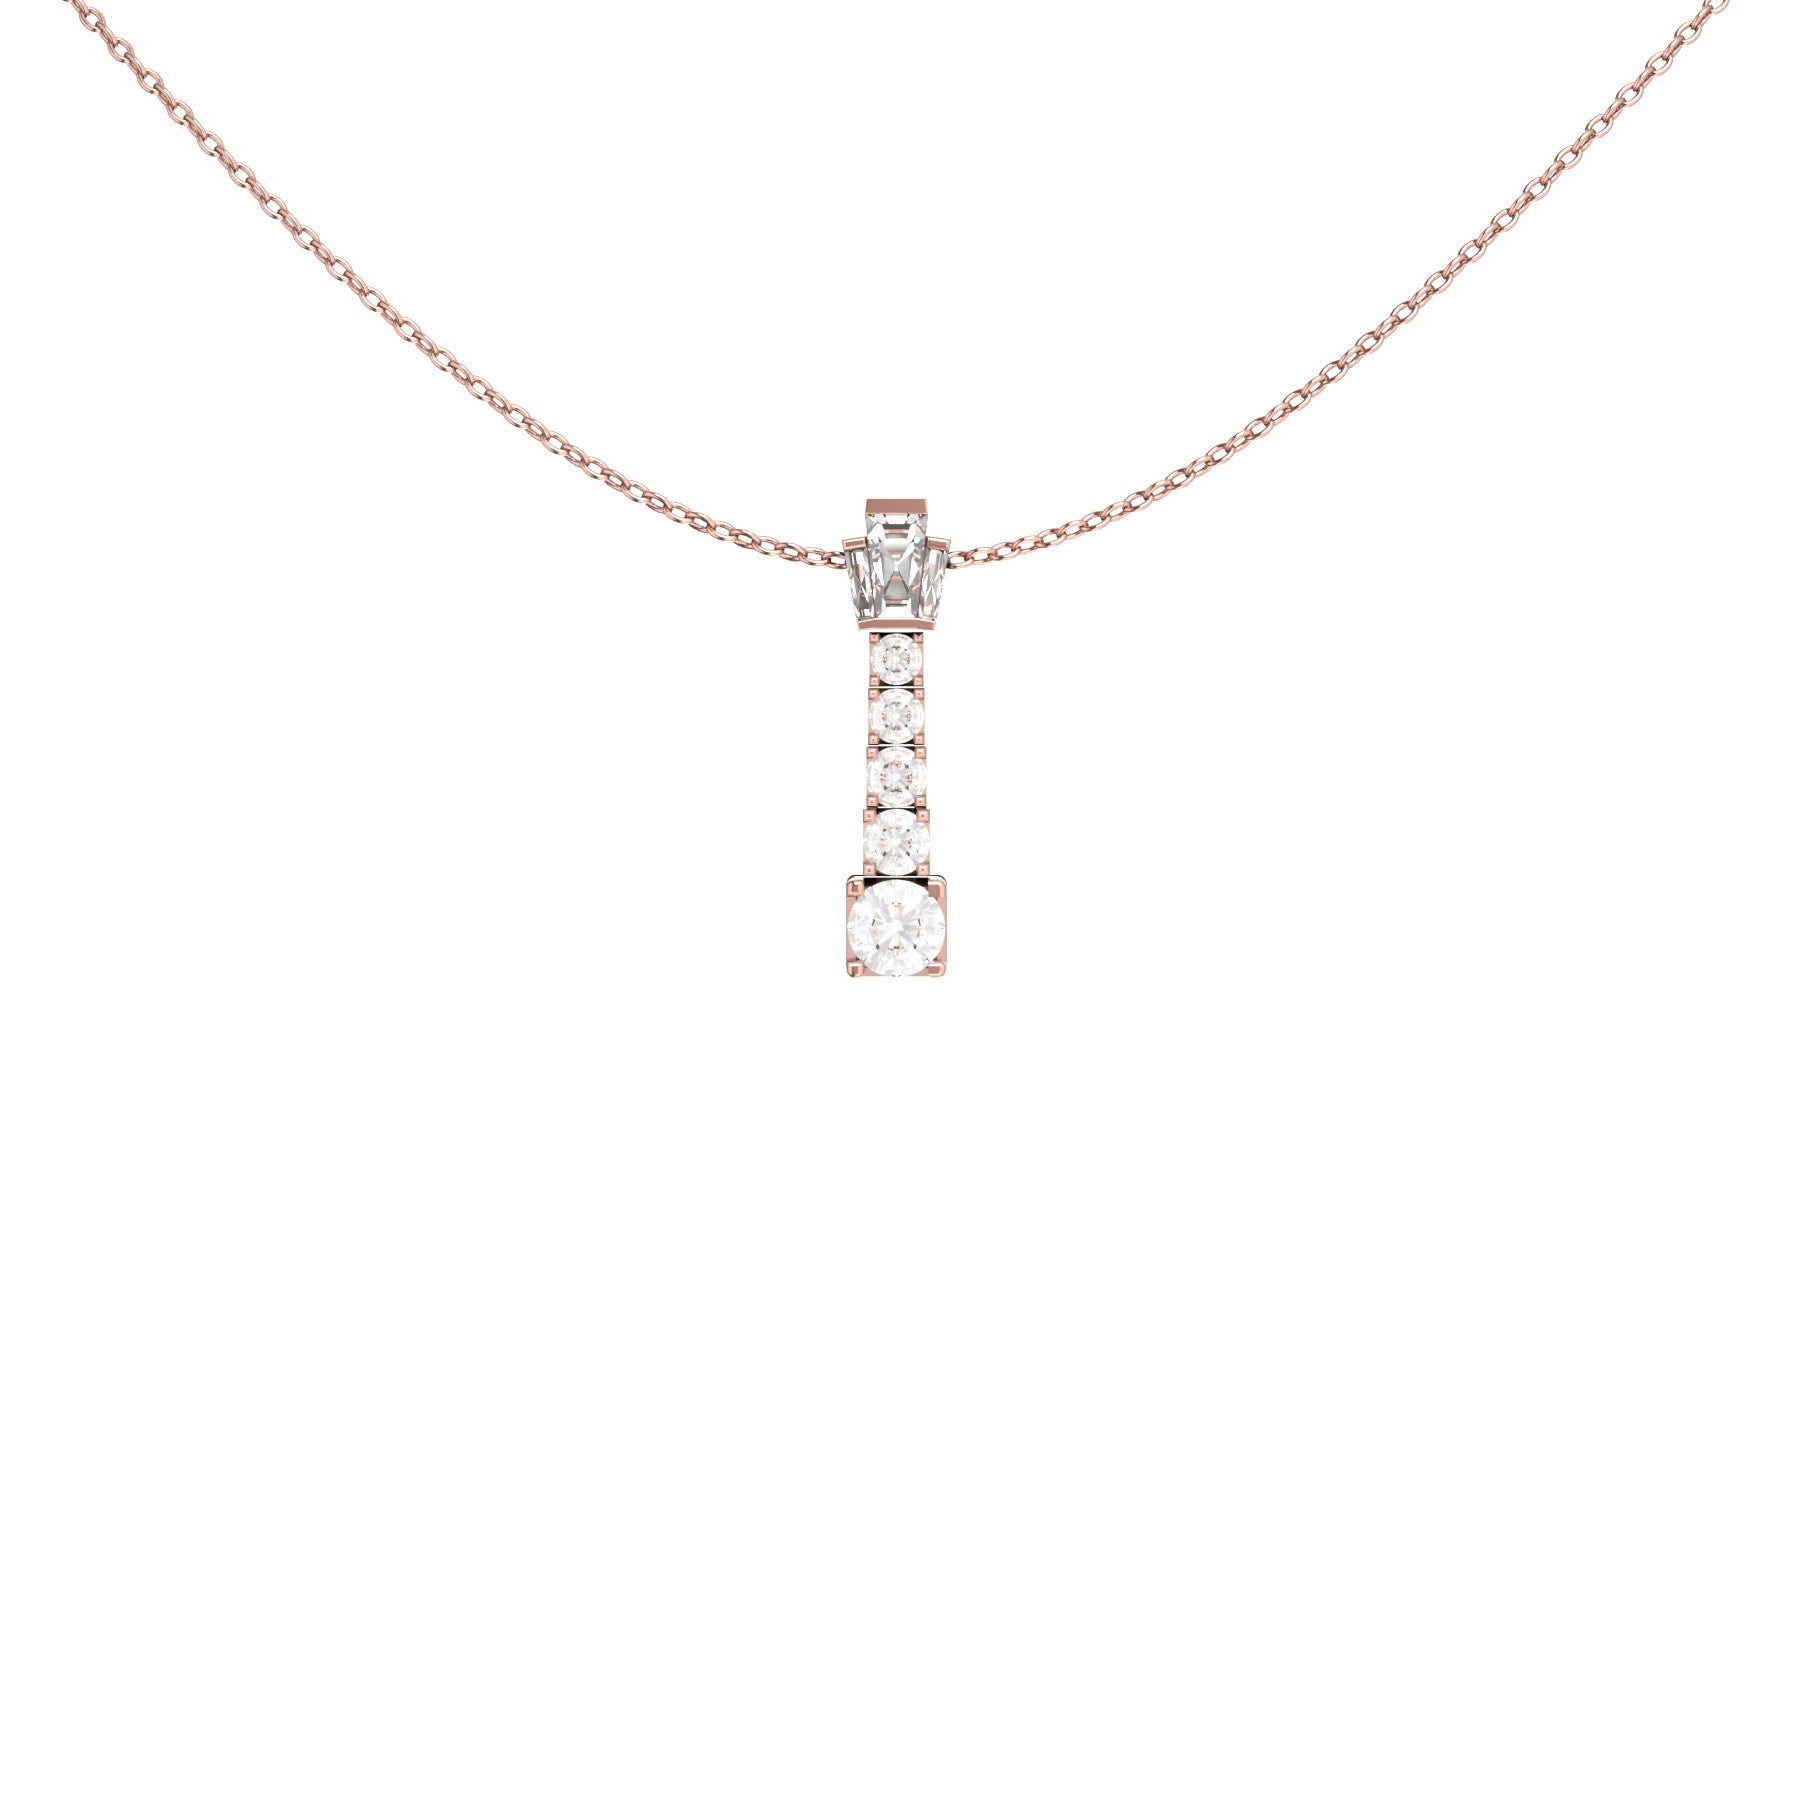 kira pendant, natural round diamonds, 18 K pink gold, weight about 4,0 g (0.14 oz) length 21 mm